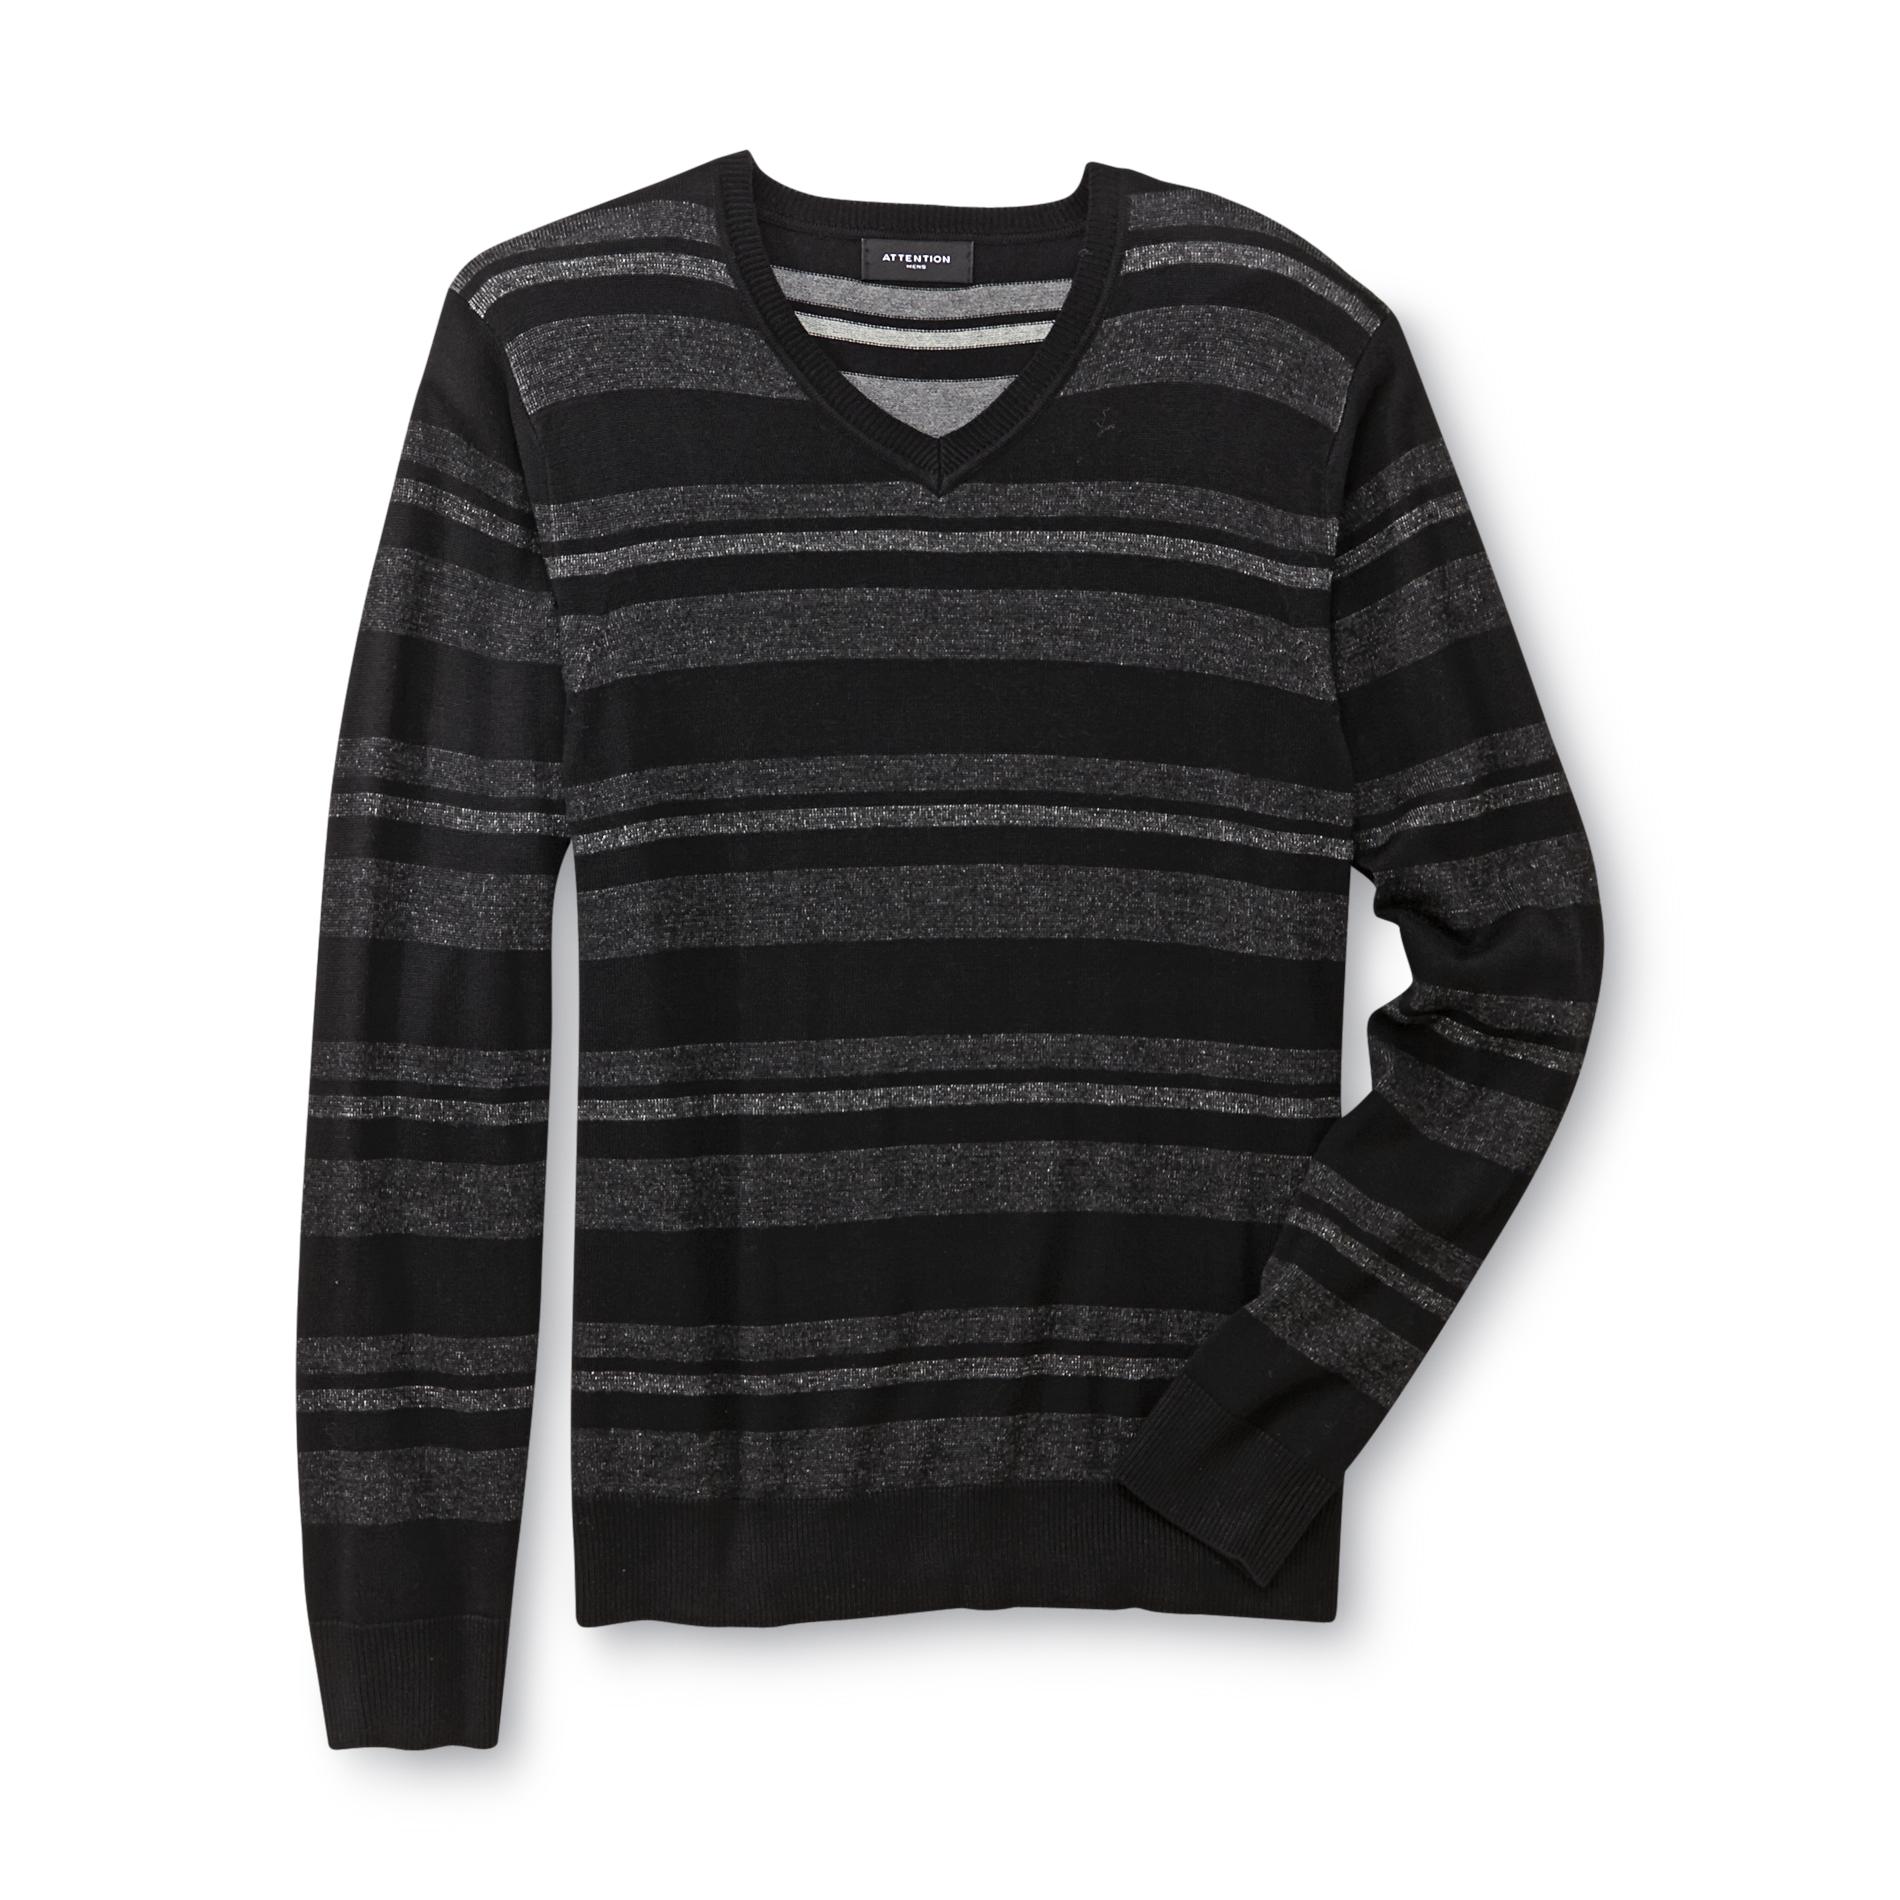 Attention Men's V-Neck Sweater - Striped